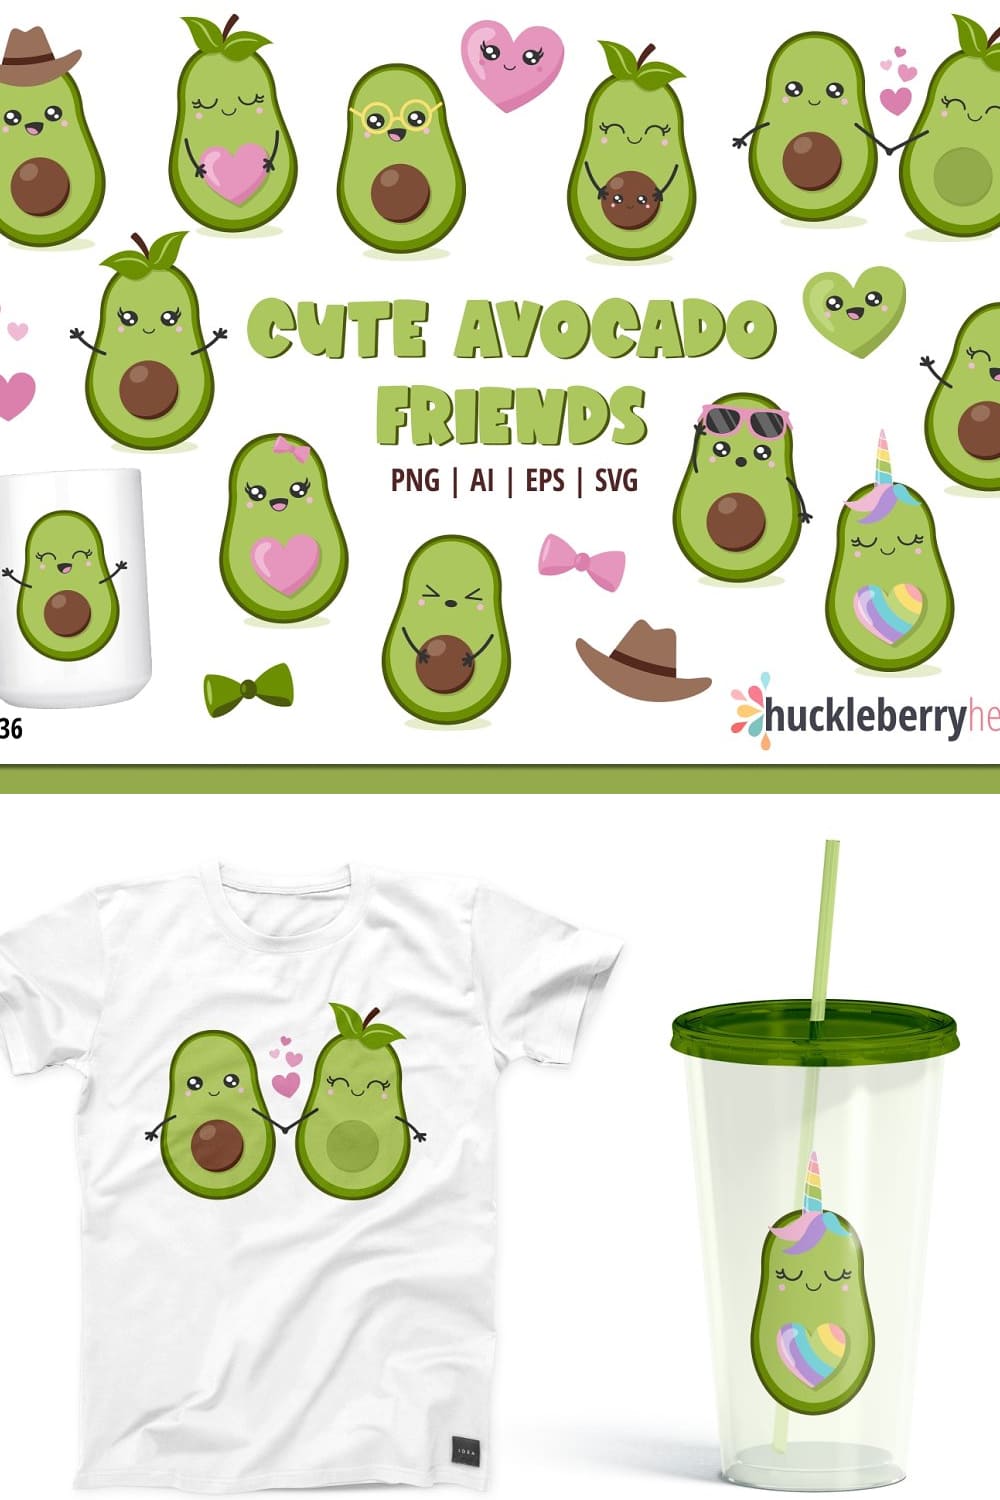 Cute avocado friends - pinterest image preview.